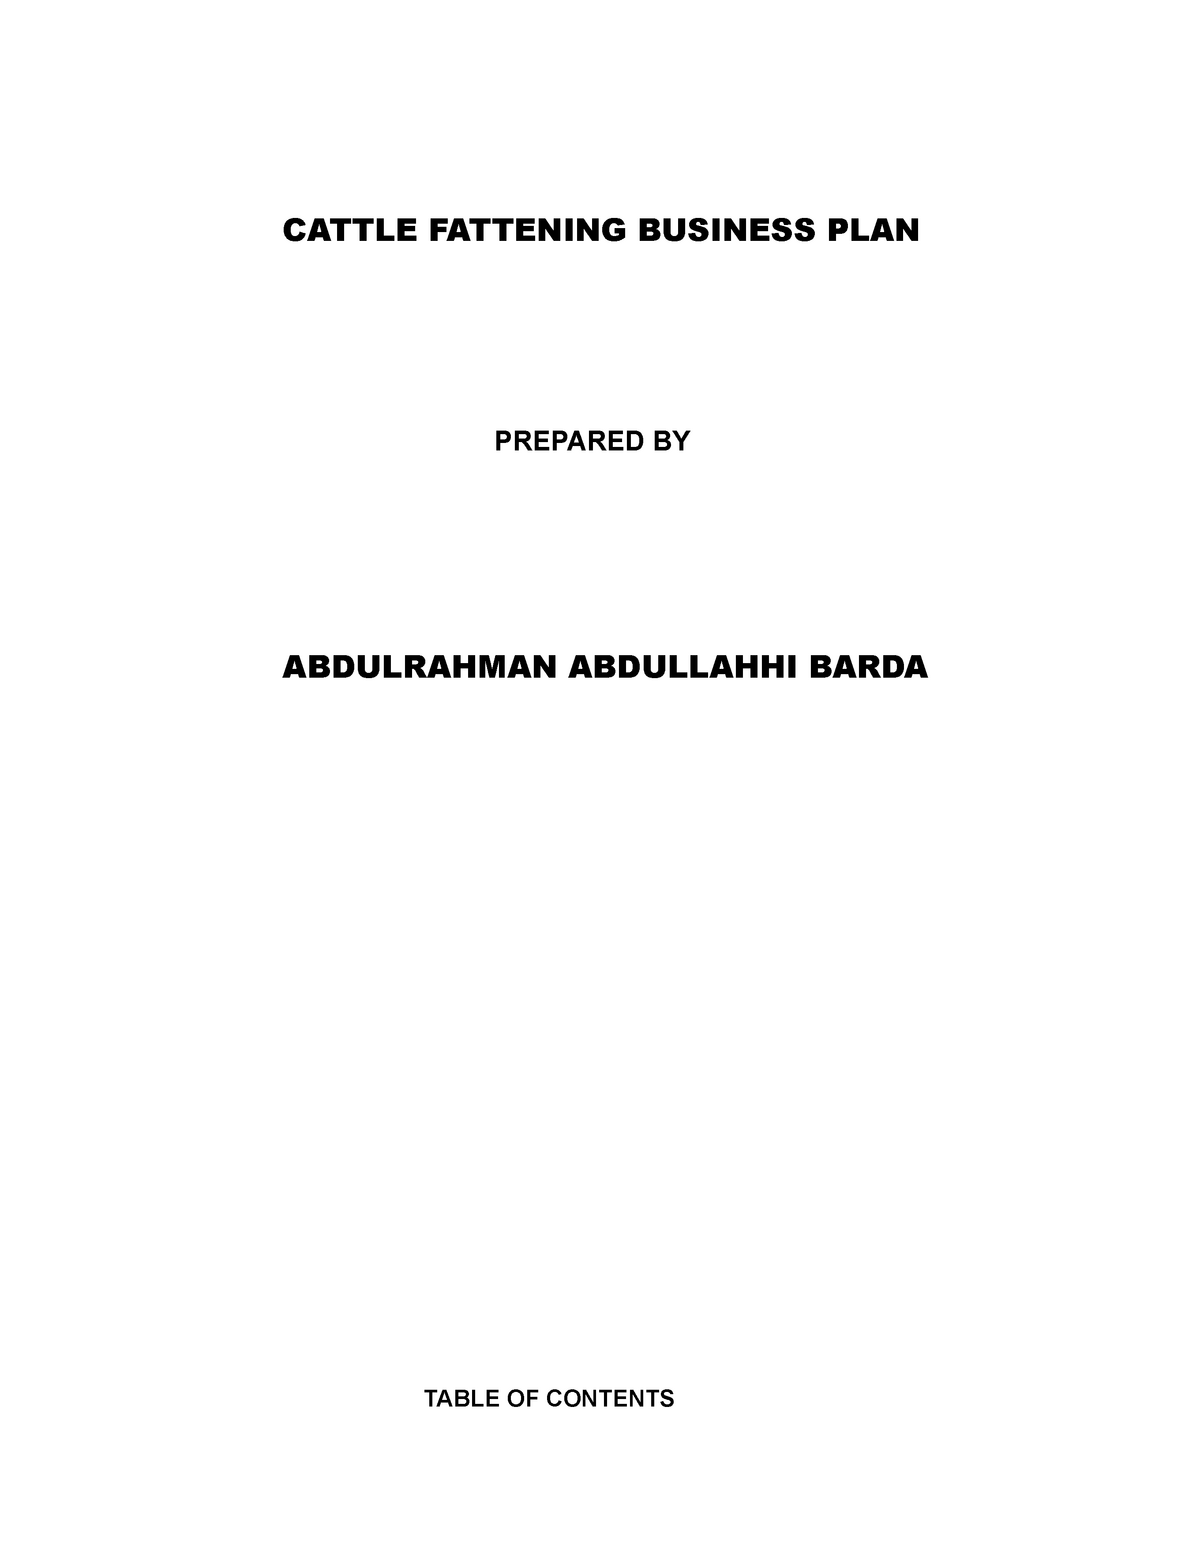 cattle fattening business plan sample